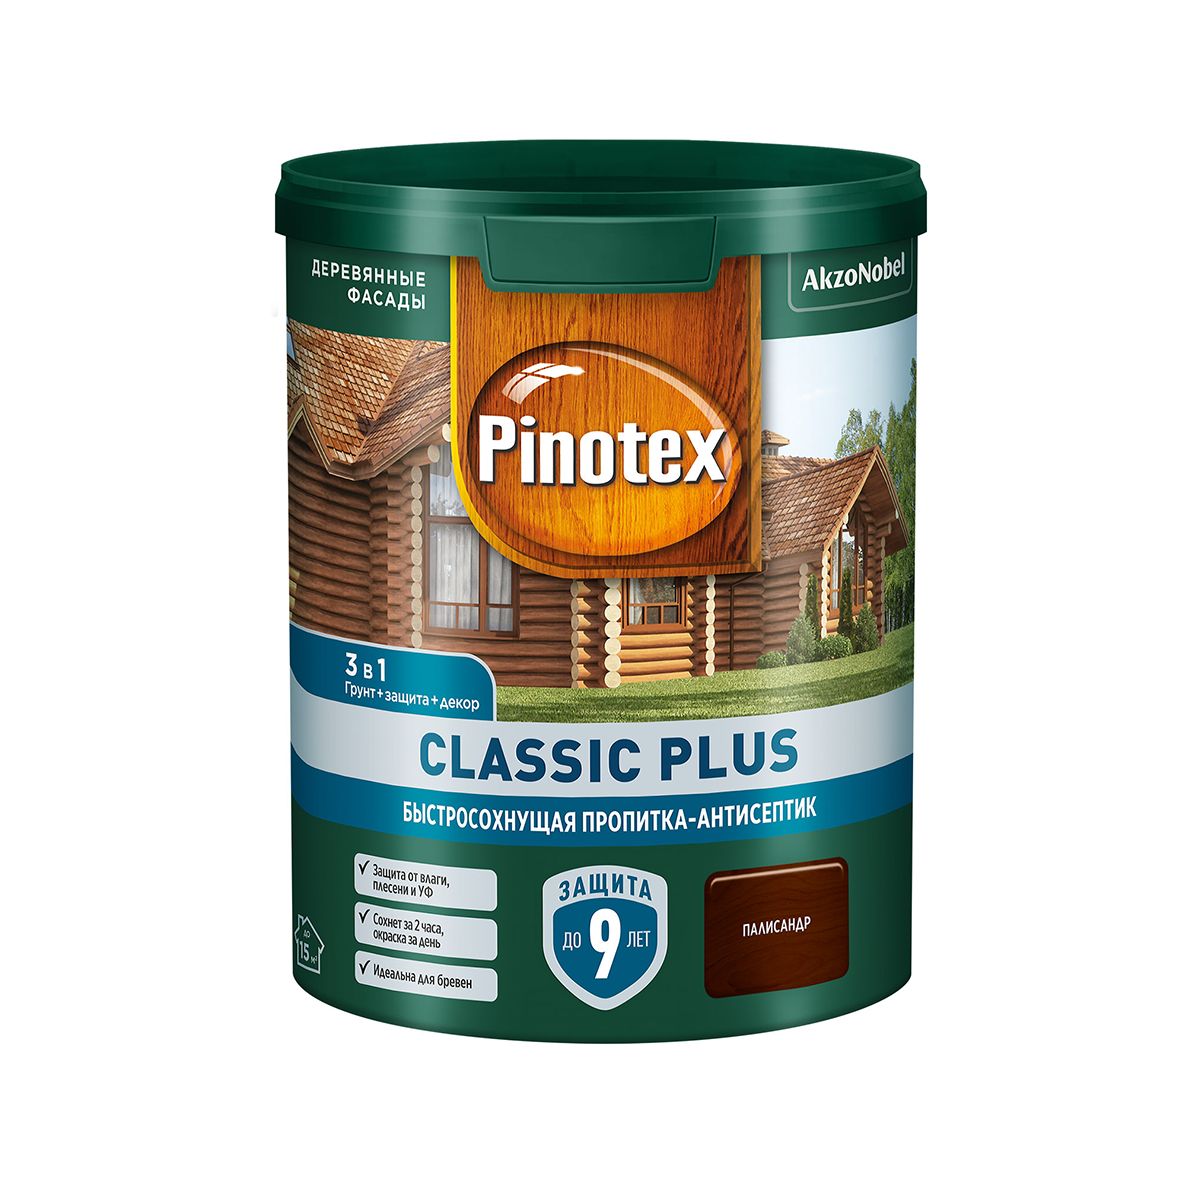 Пропитка-антисептик Pinotex Classic Plus 3 в 1,быстросохнущая, палисандр, 900 мл пропитка антисептик pinotex classic plus 3 в 1 быстросохнущая сосна 900 мл